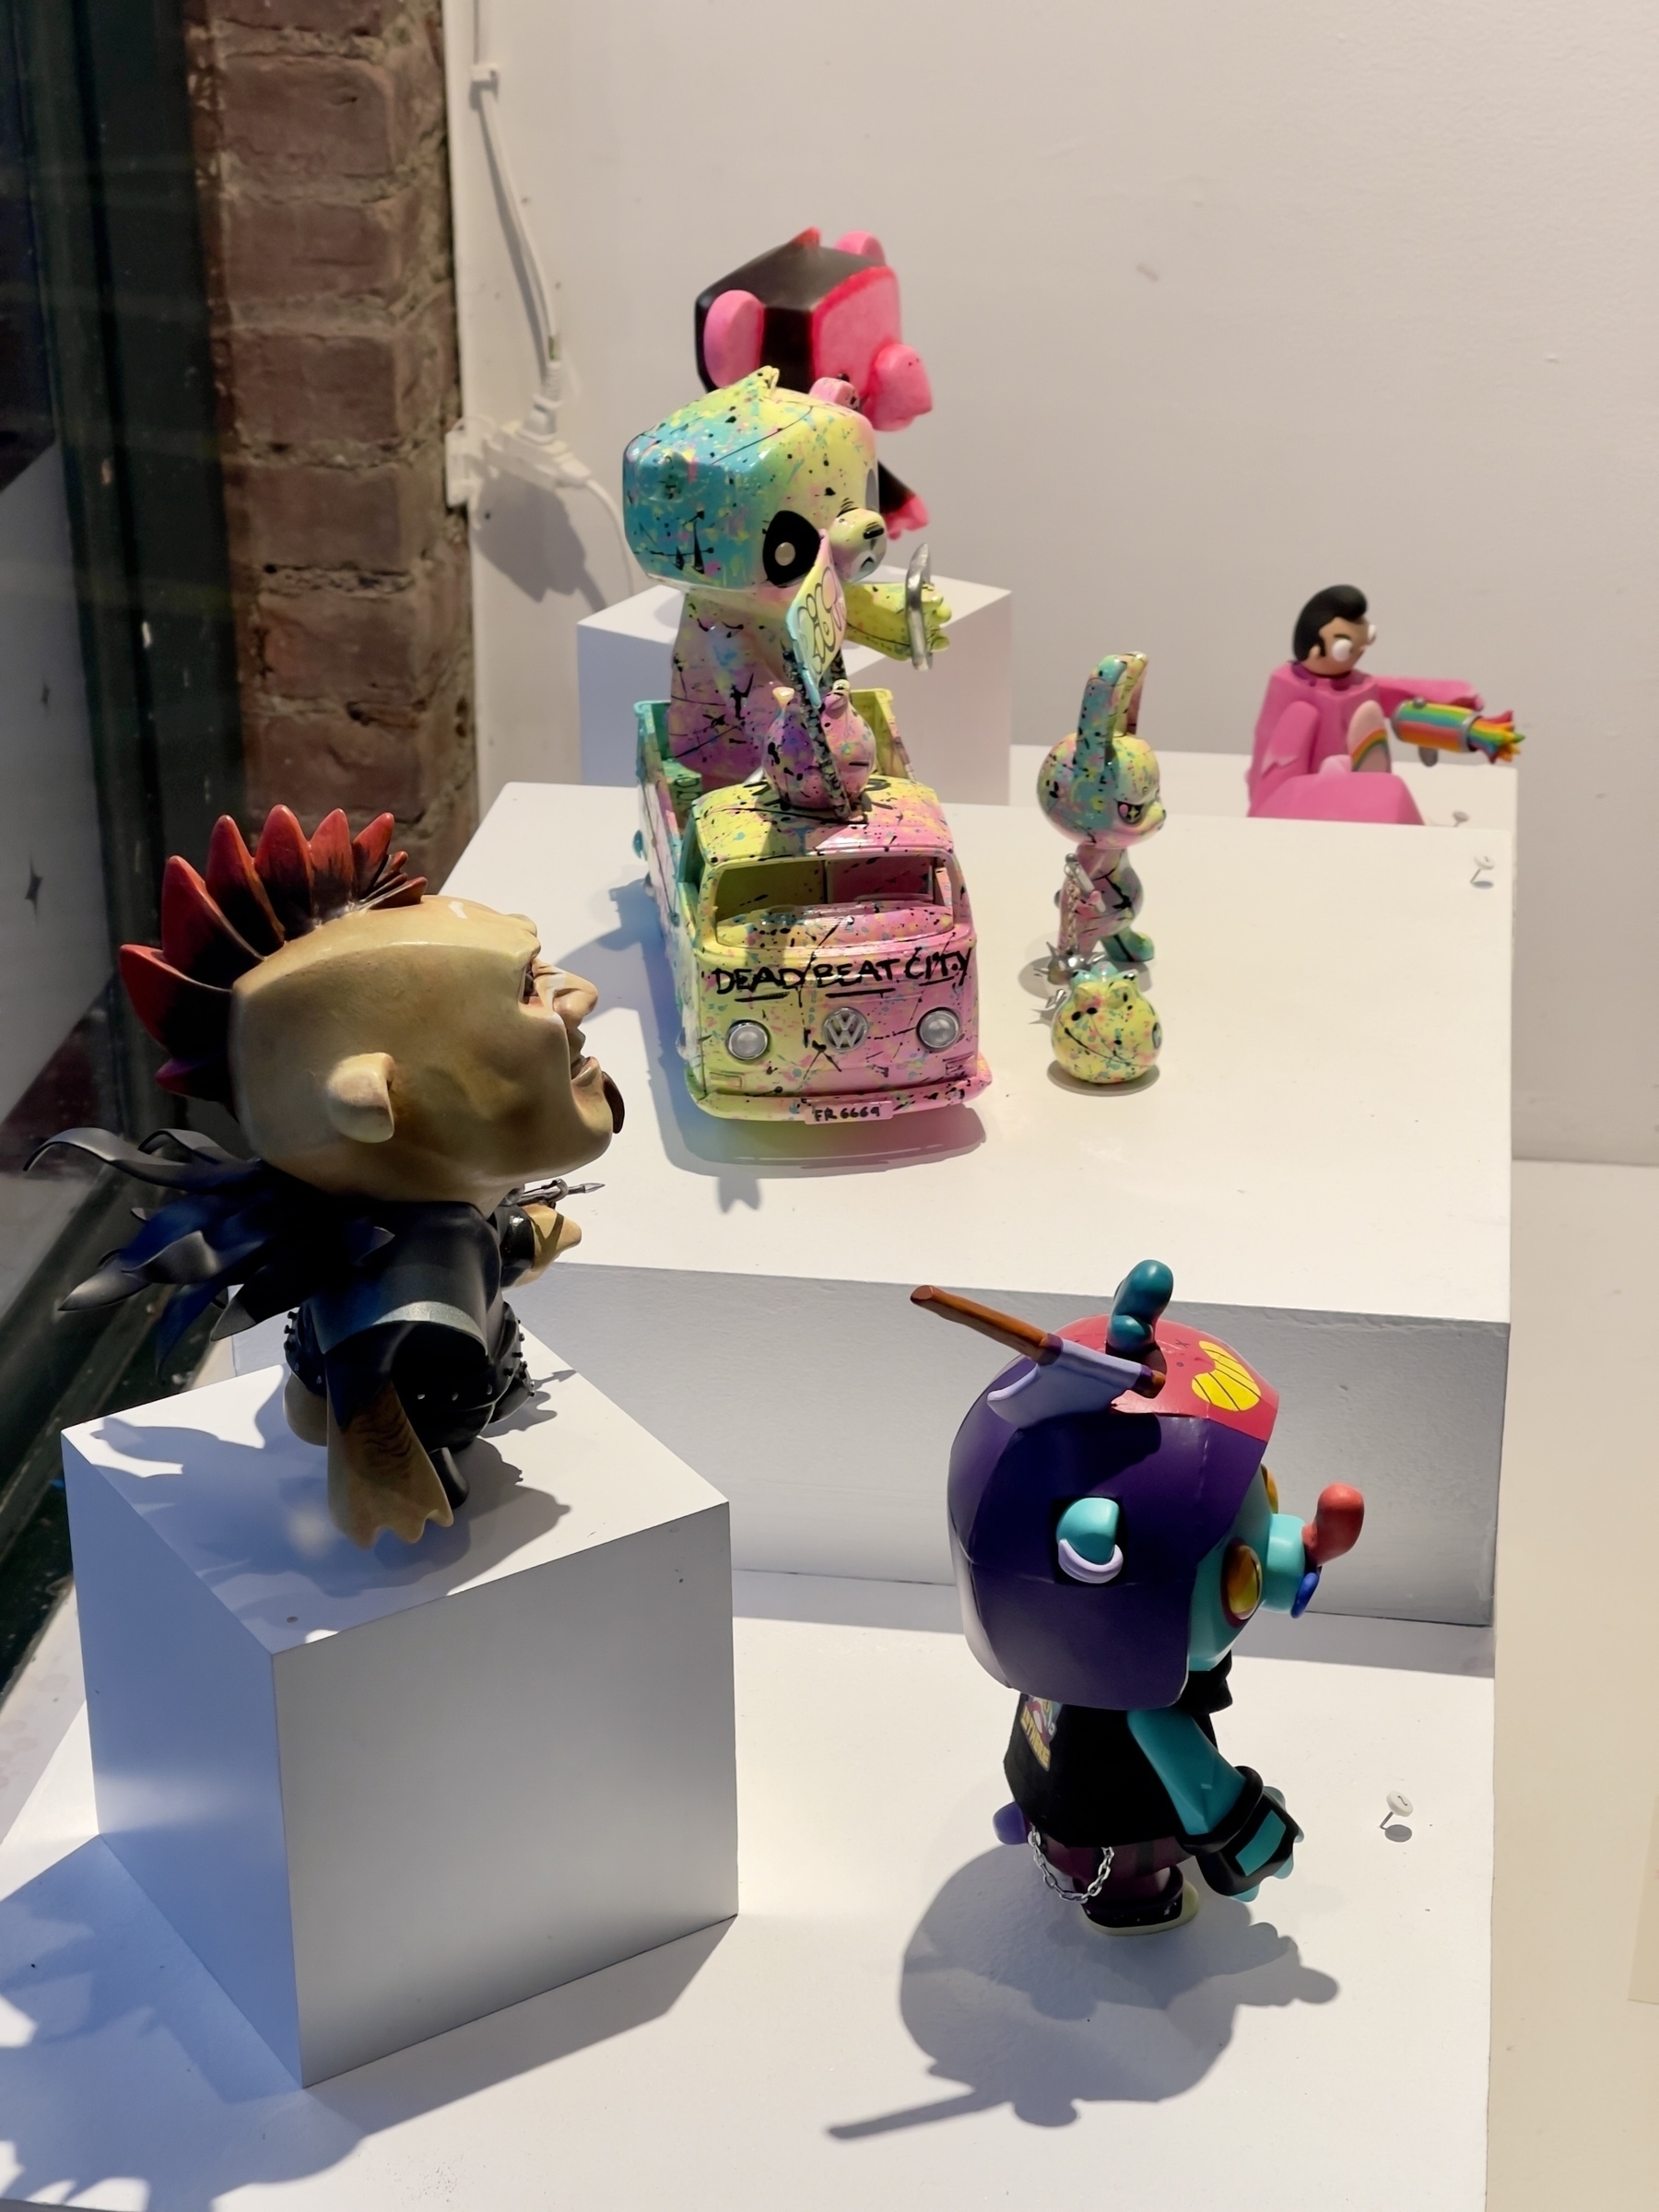 Art toy figures in a gallery window.